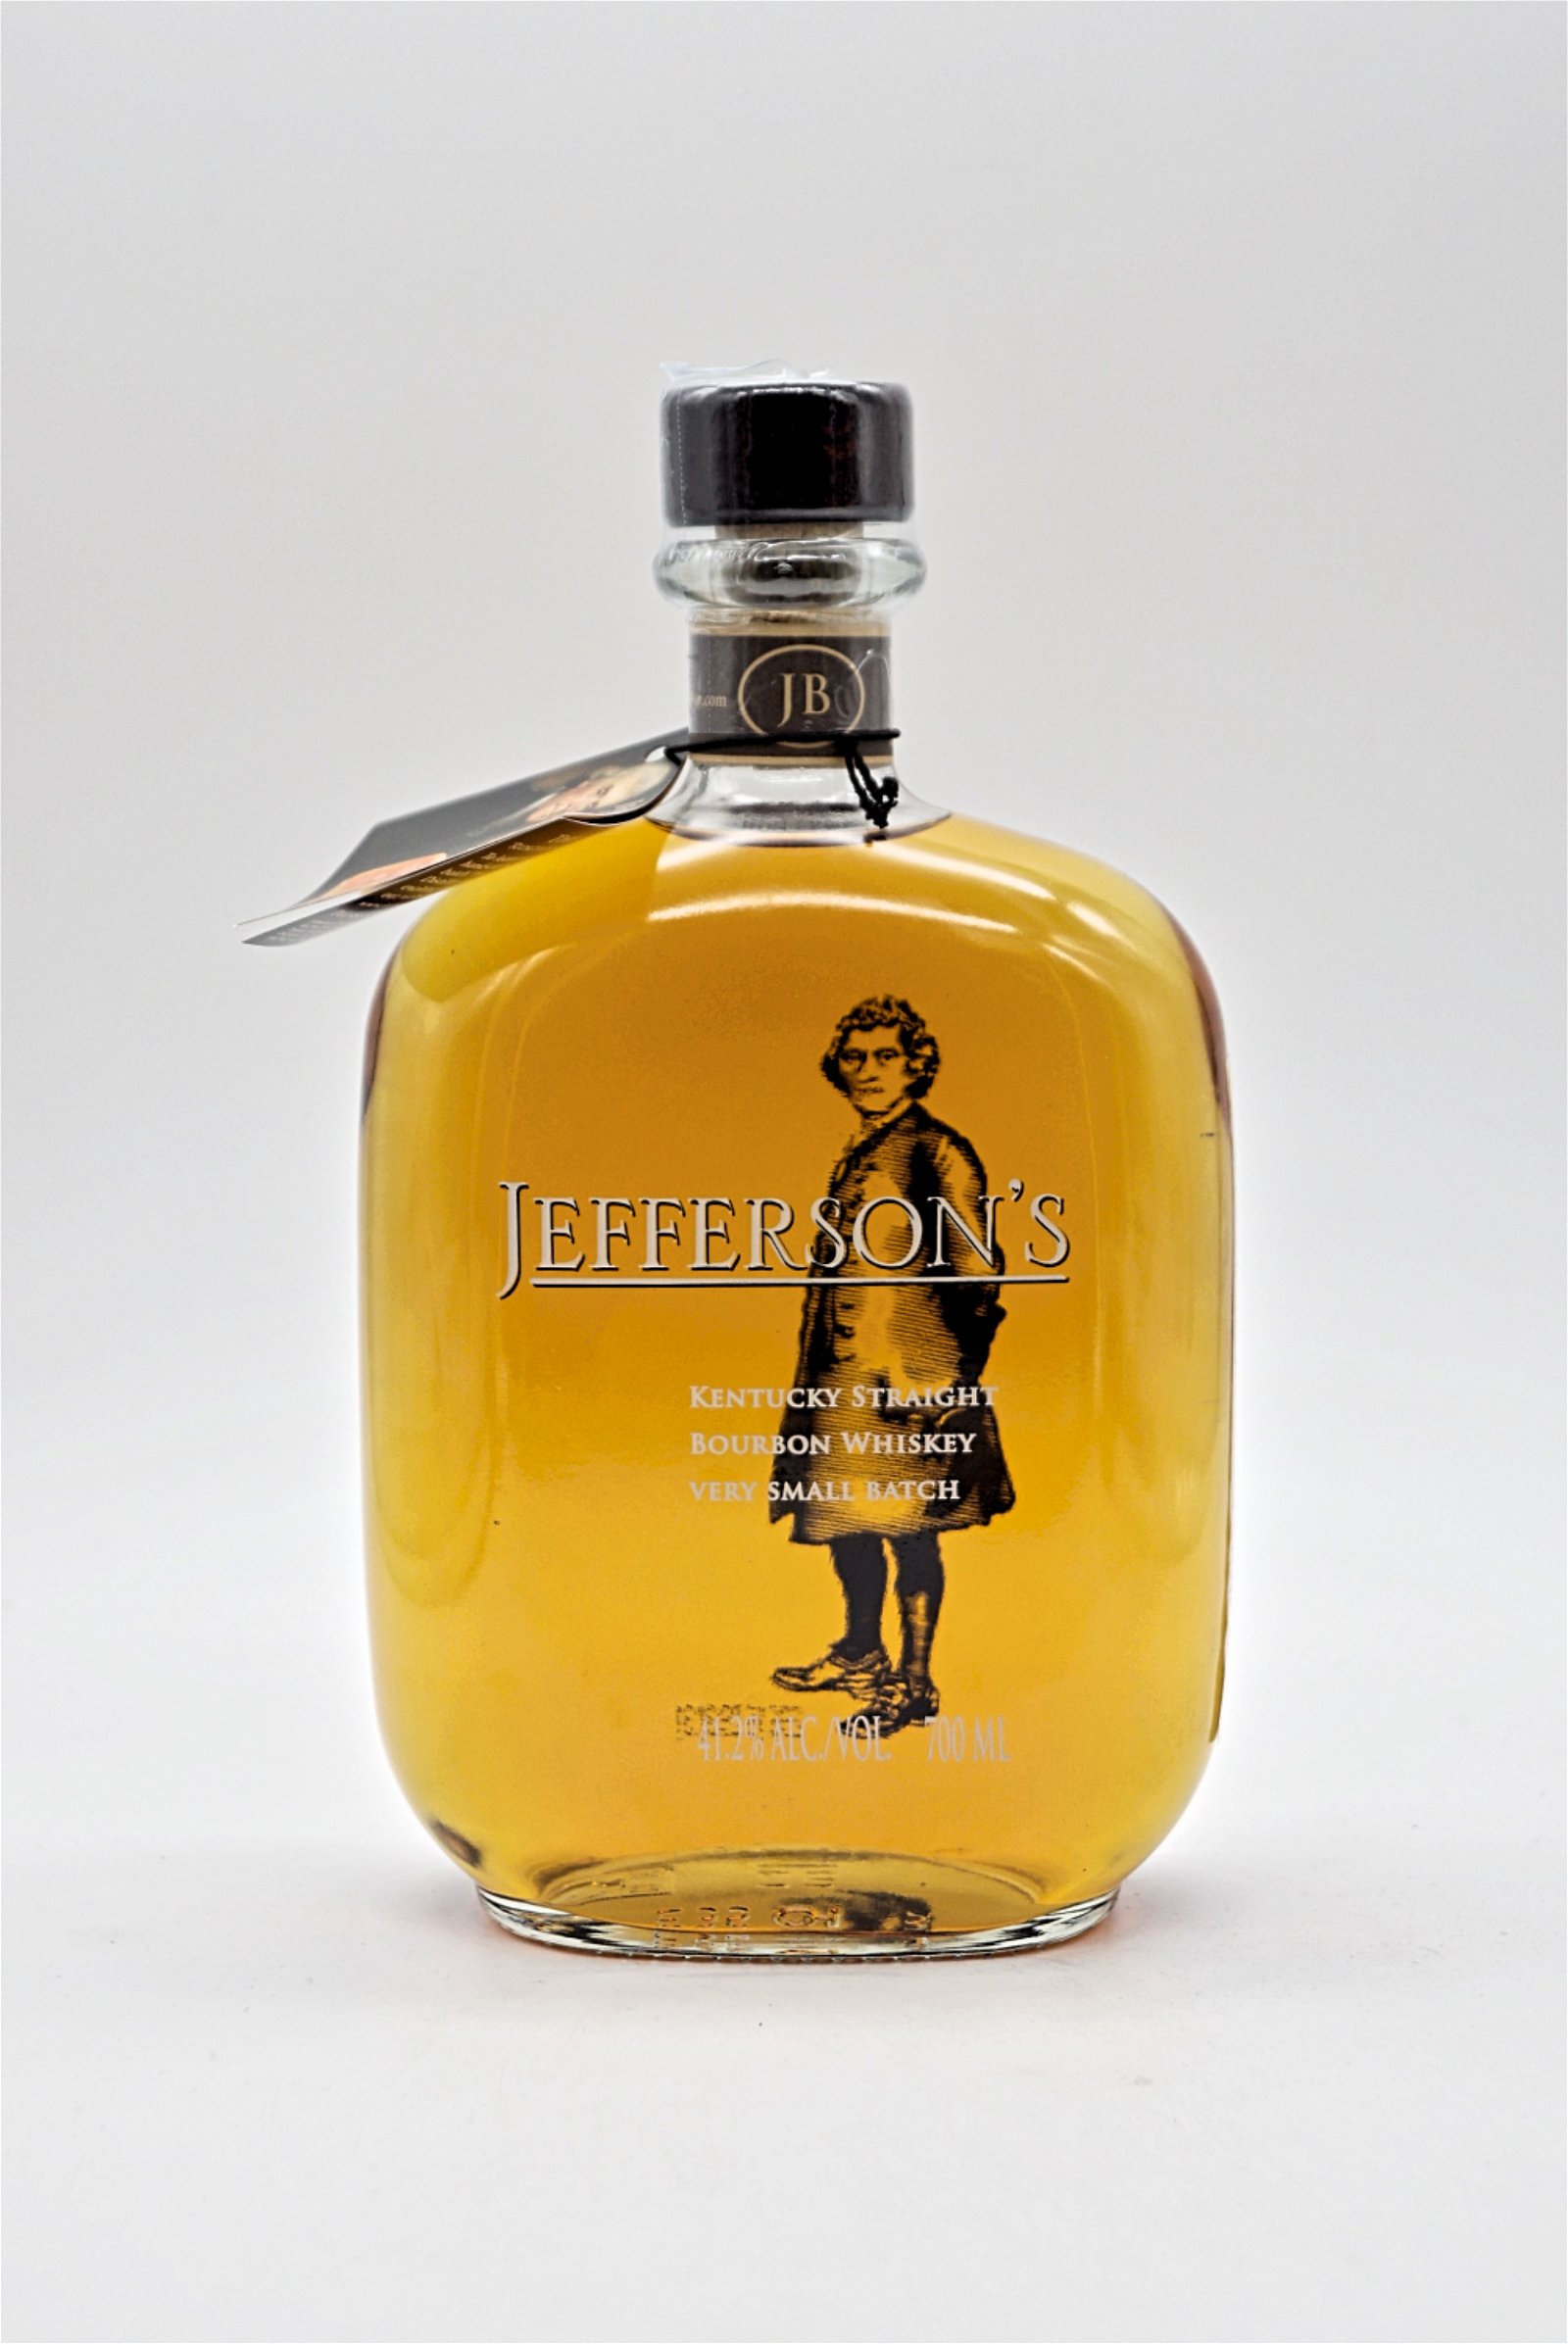 Jeffersons Kentucky Straight Bourbon Wiskey Very Small Batch